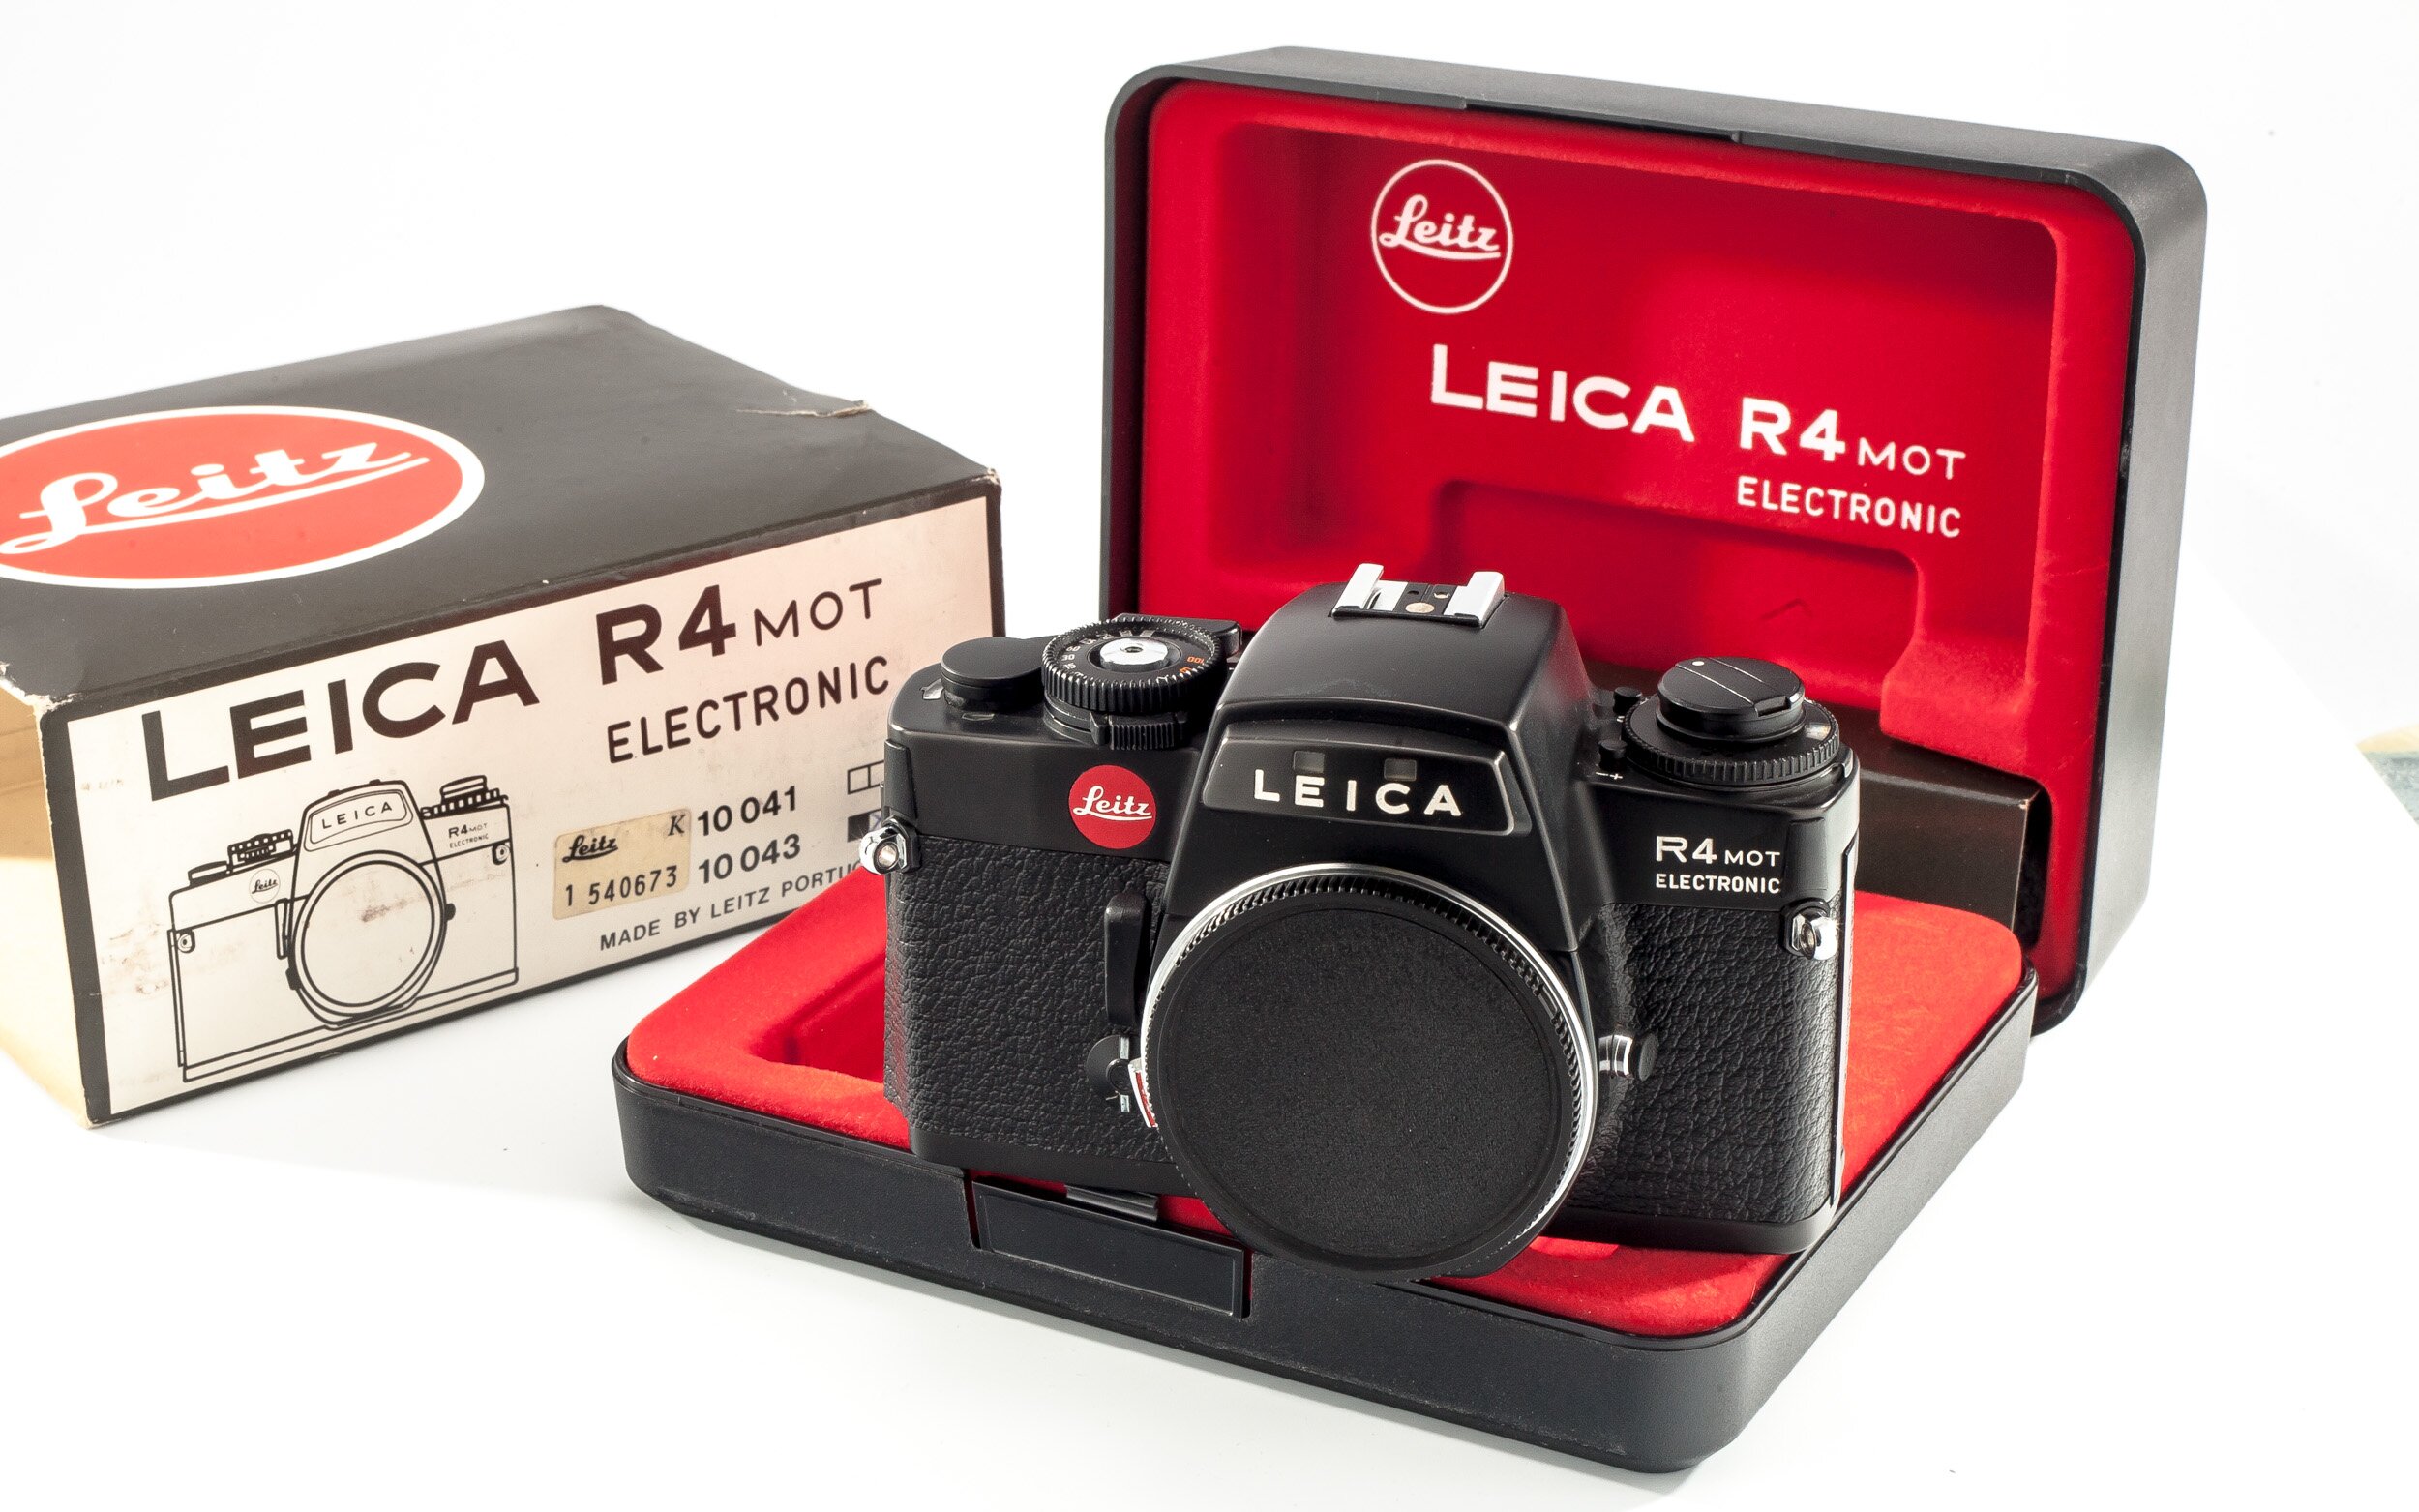 Leica R4 Mot Electronic Gehäuse schwarz 10043